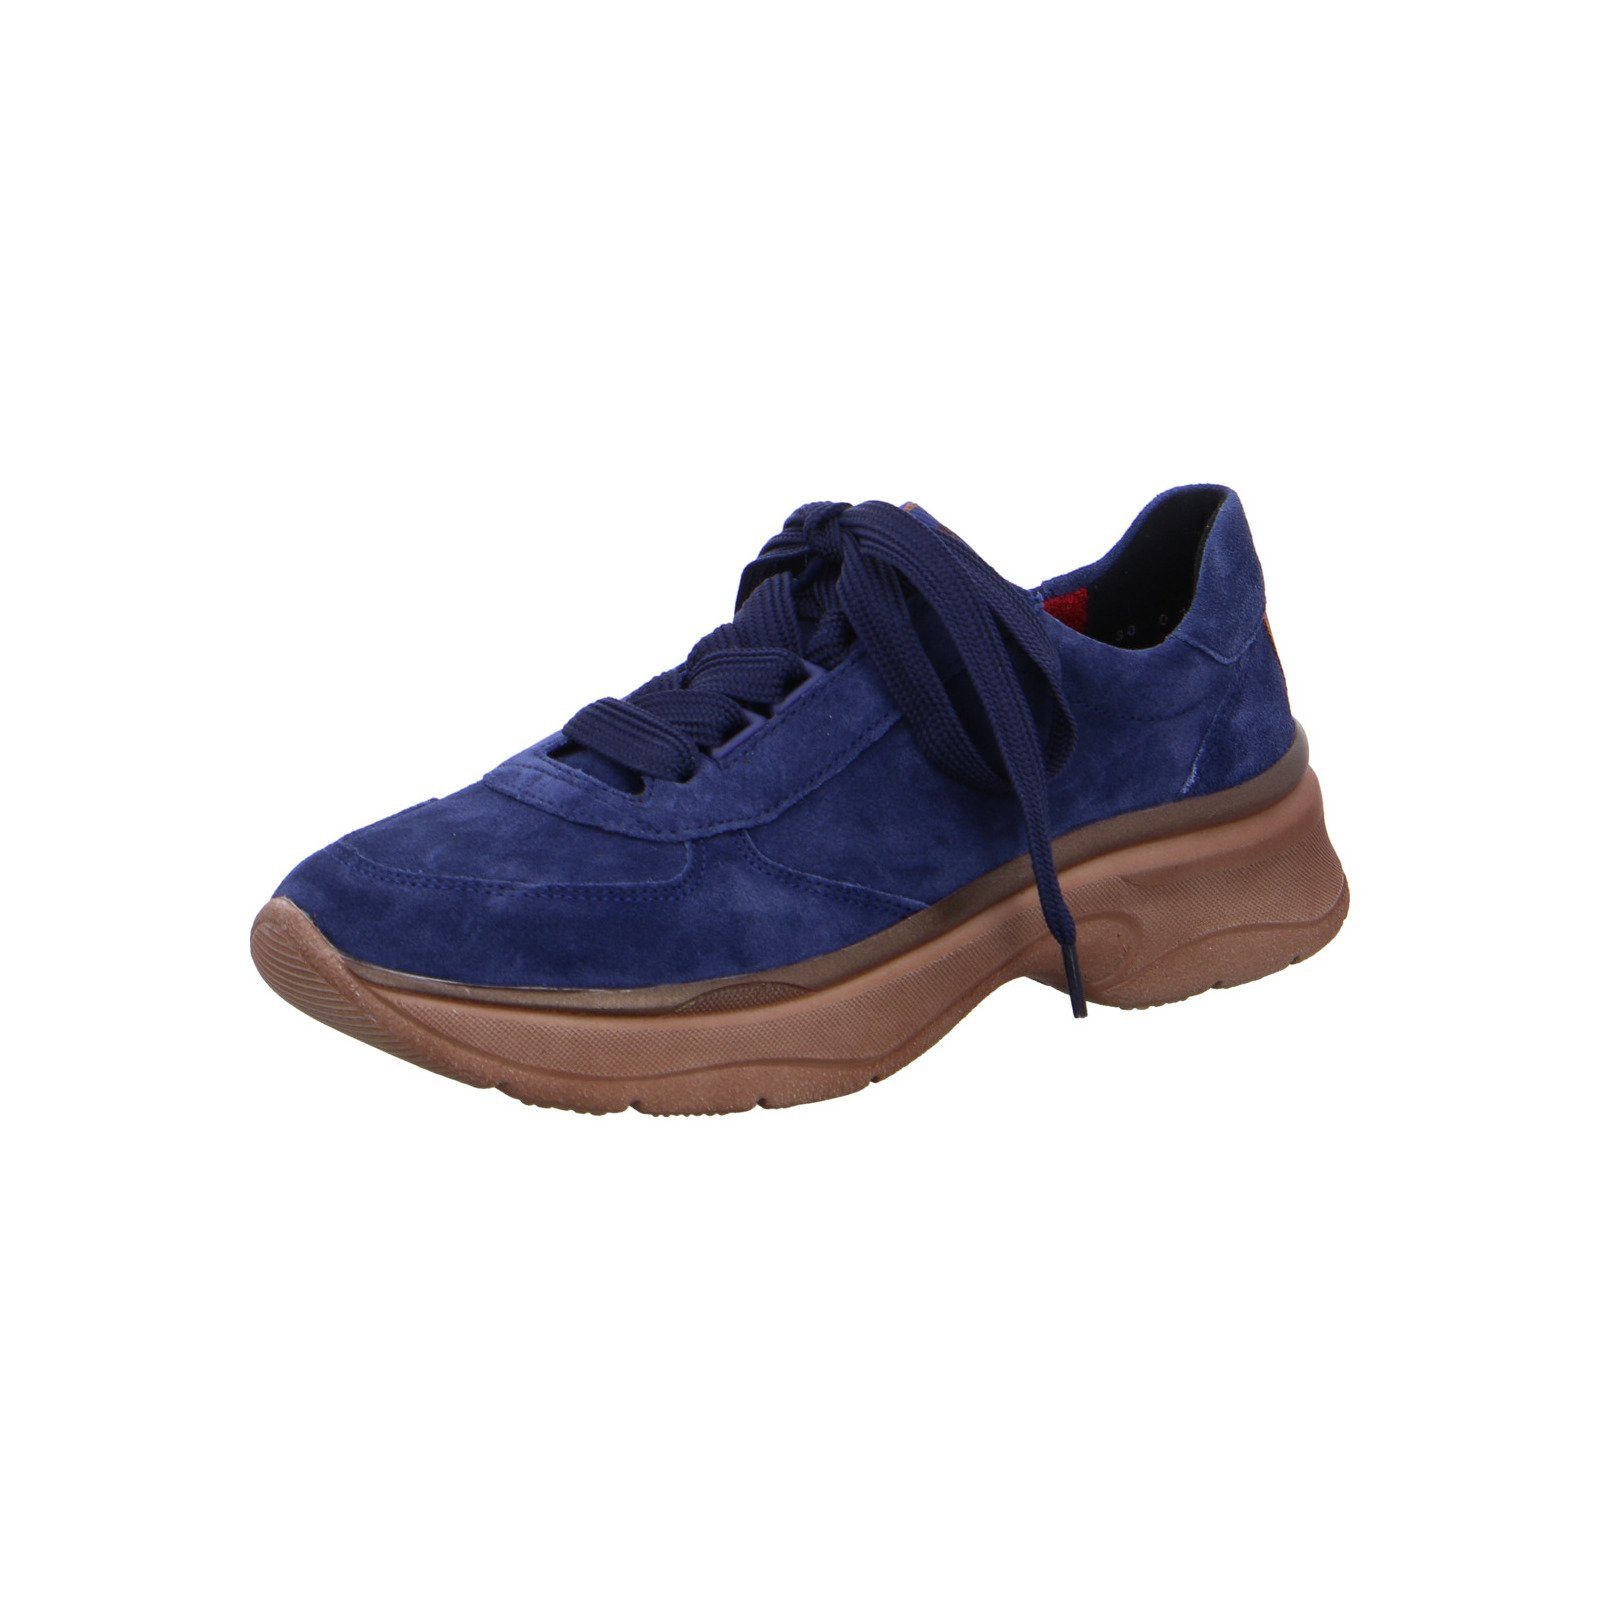 Ara Roma - Damen Schuhe Schnürschuh Sneaker Velours blau